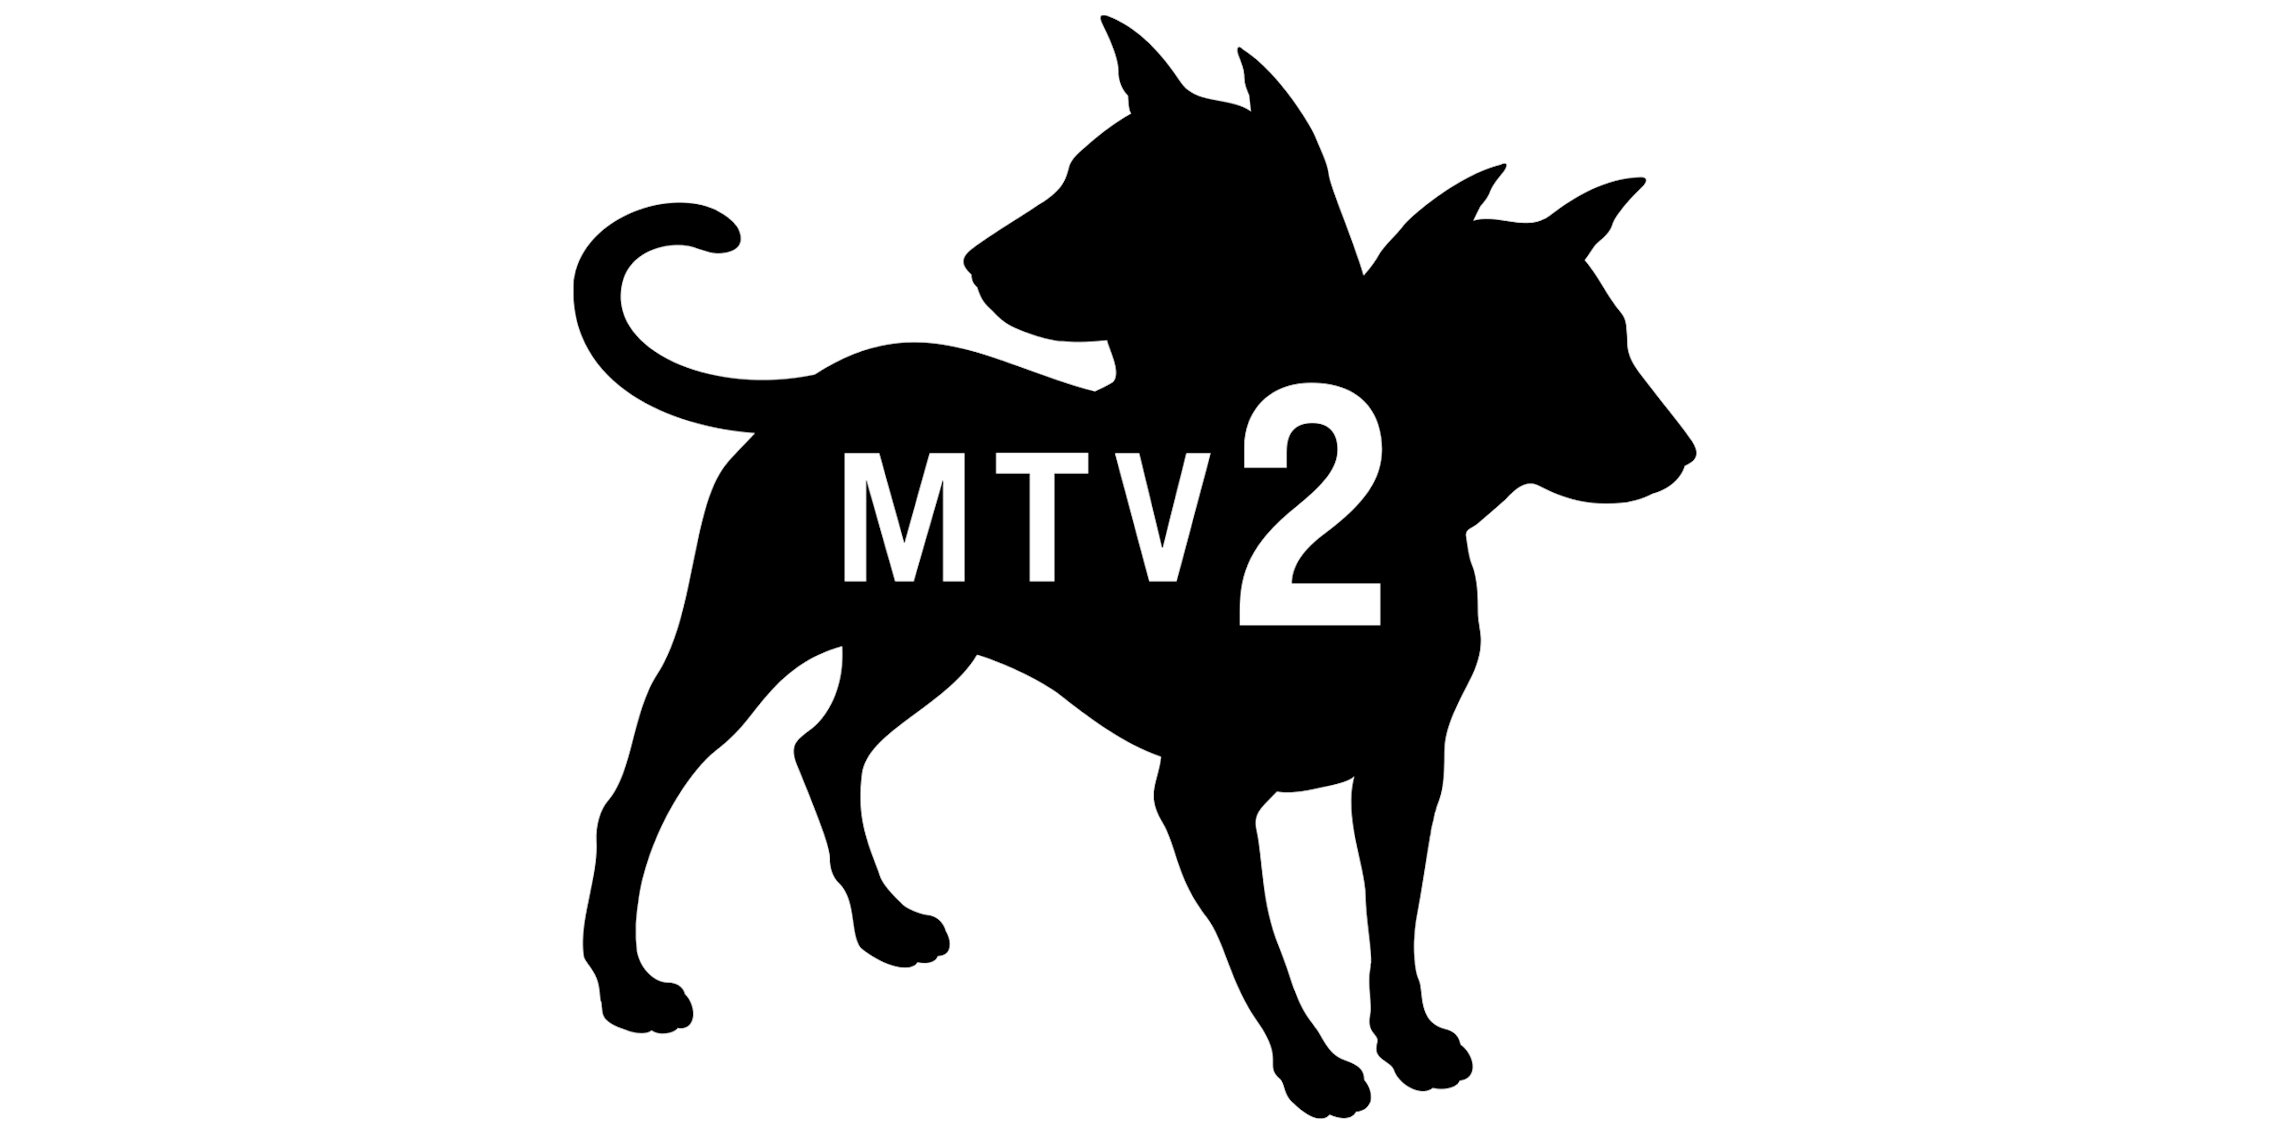 mtv2 live stream